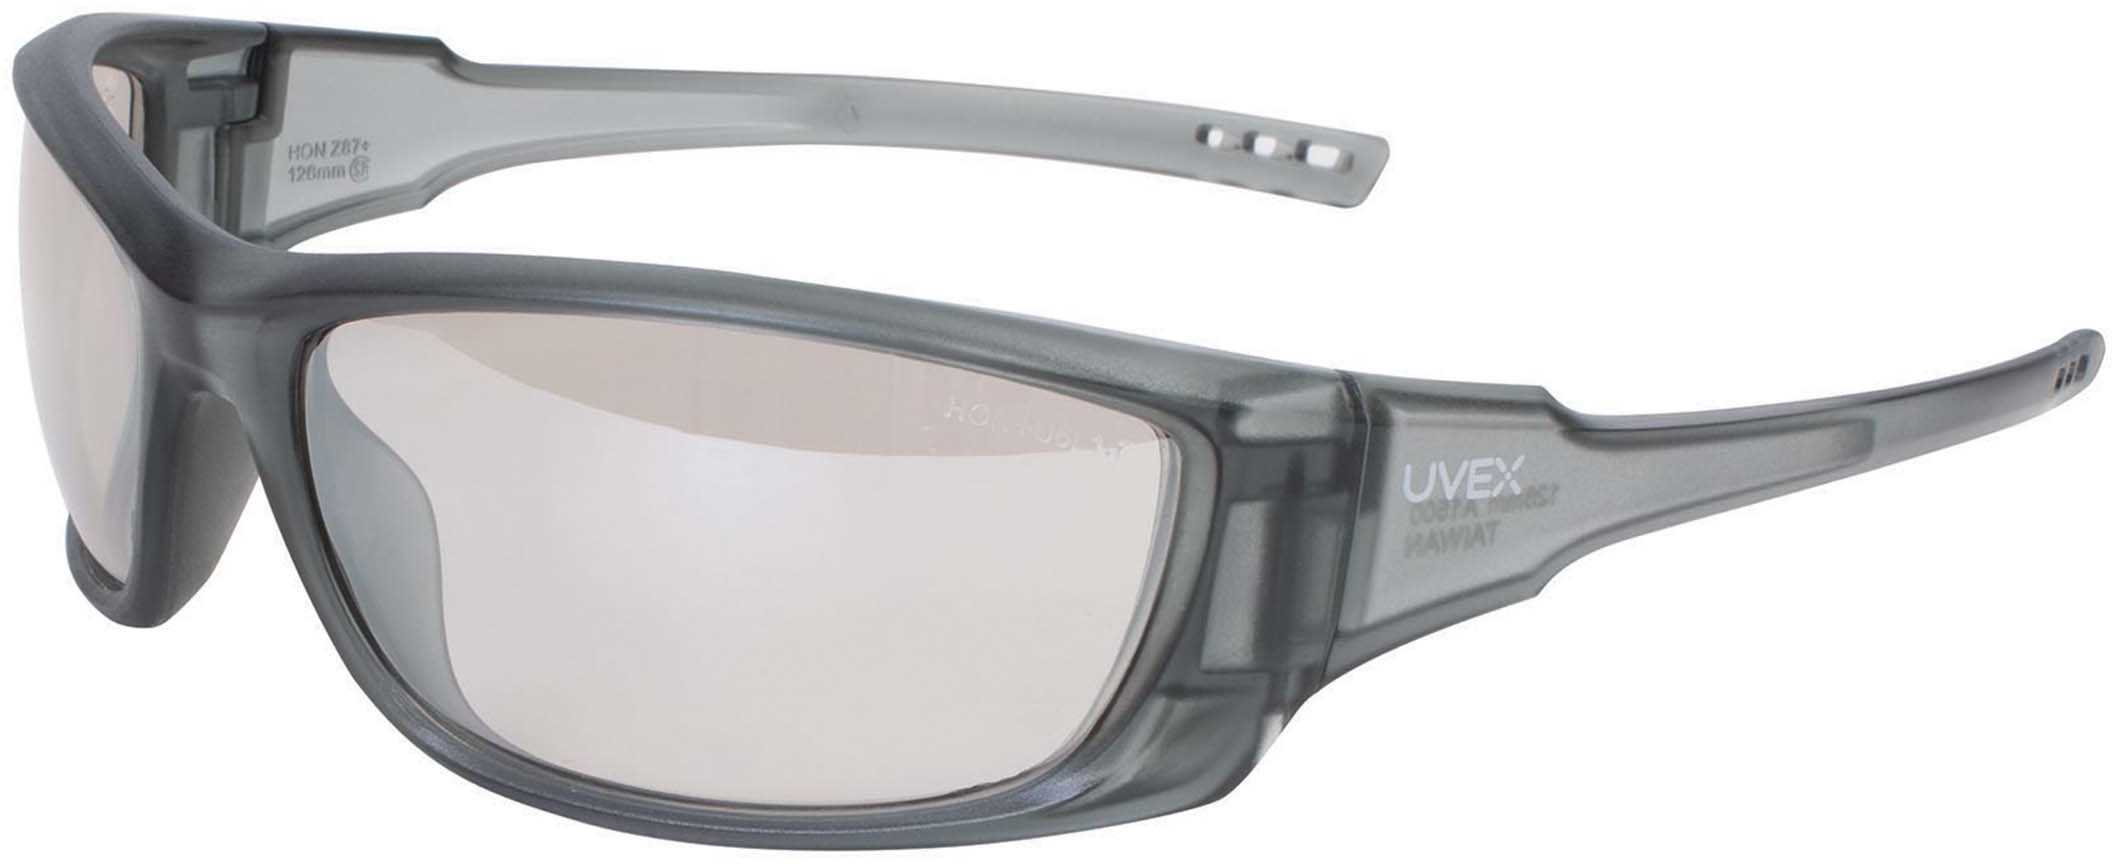 Howard Leight Uvex A1500 Safety Eyewear w/Hardcoat Lens SCT Reflect 50 Md: R-02228